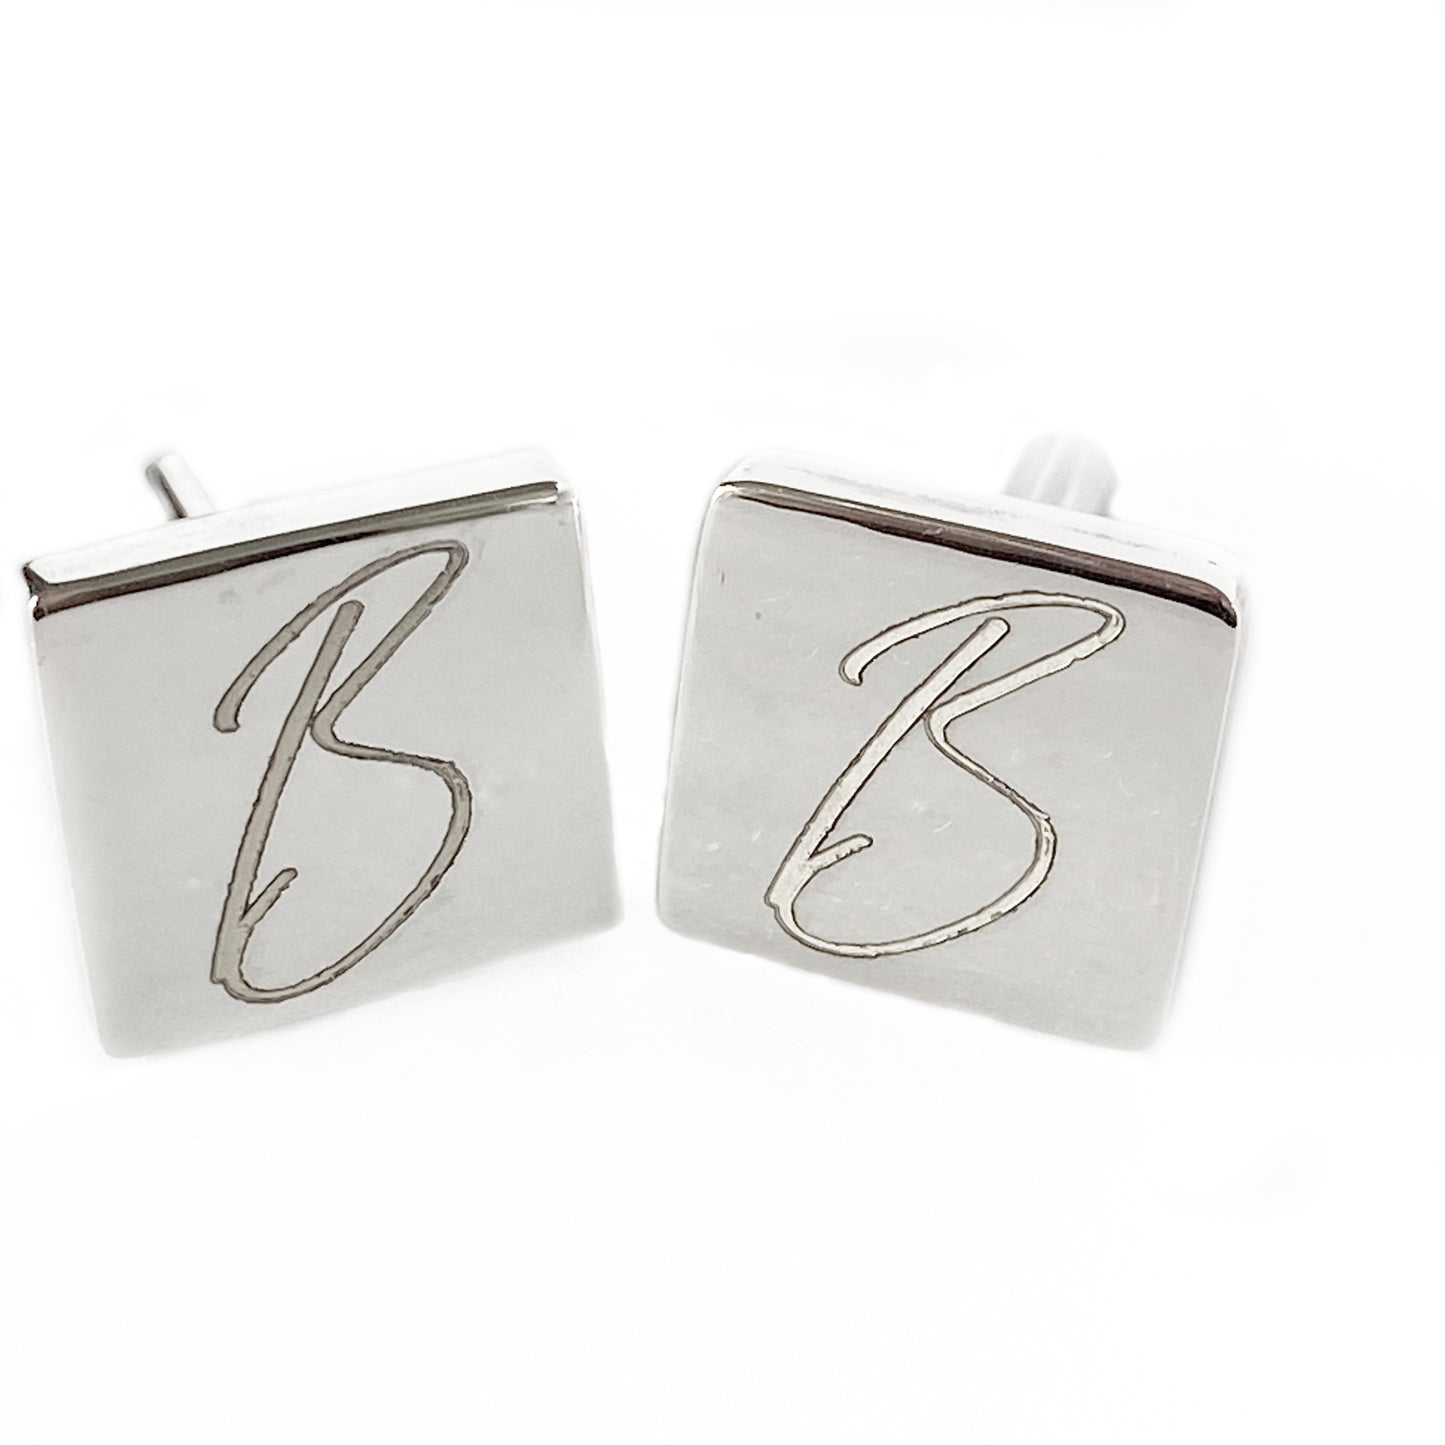 Silver Square Cuff Links w Custom Initials B